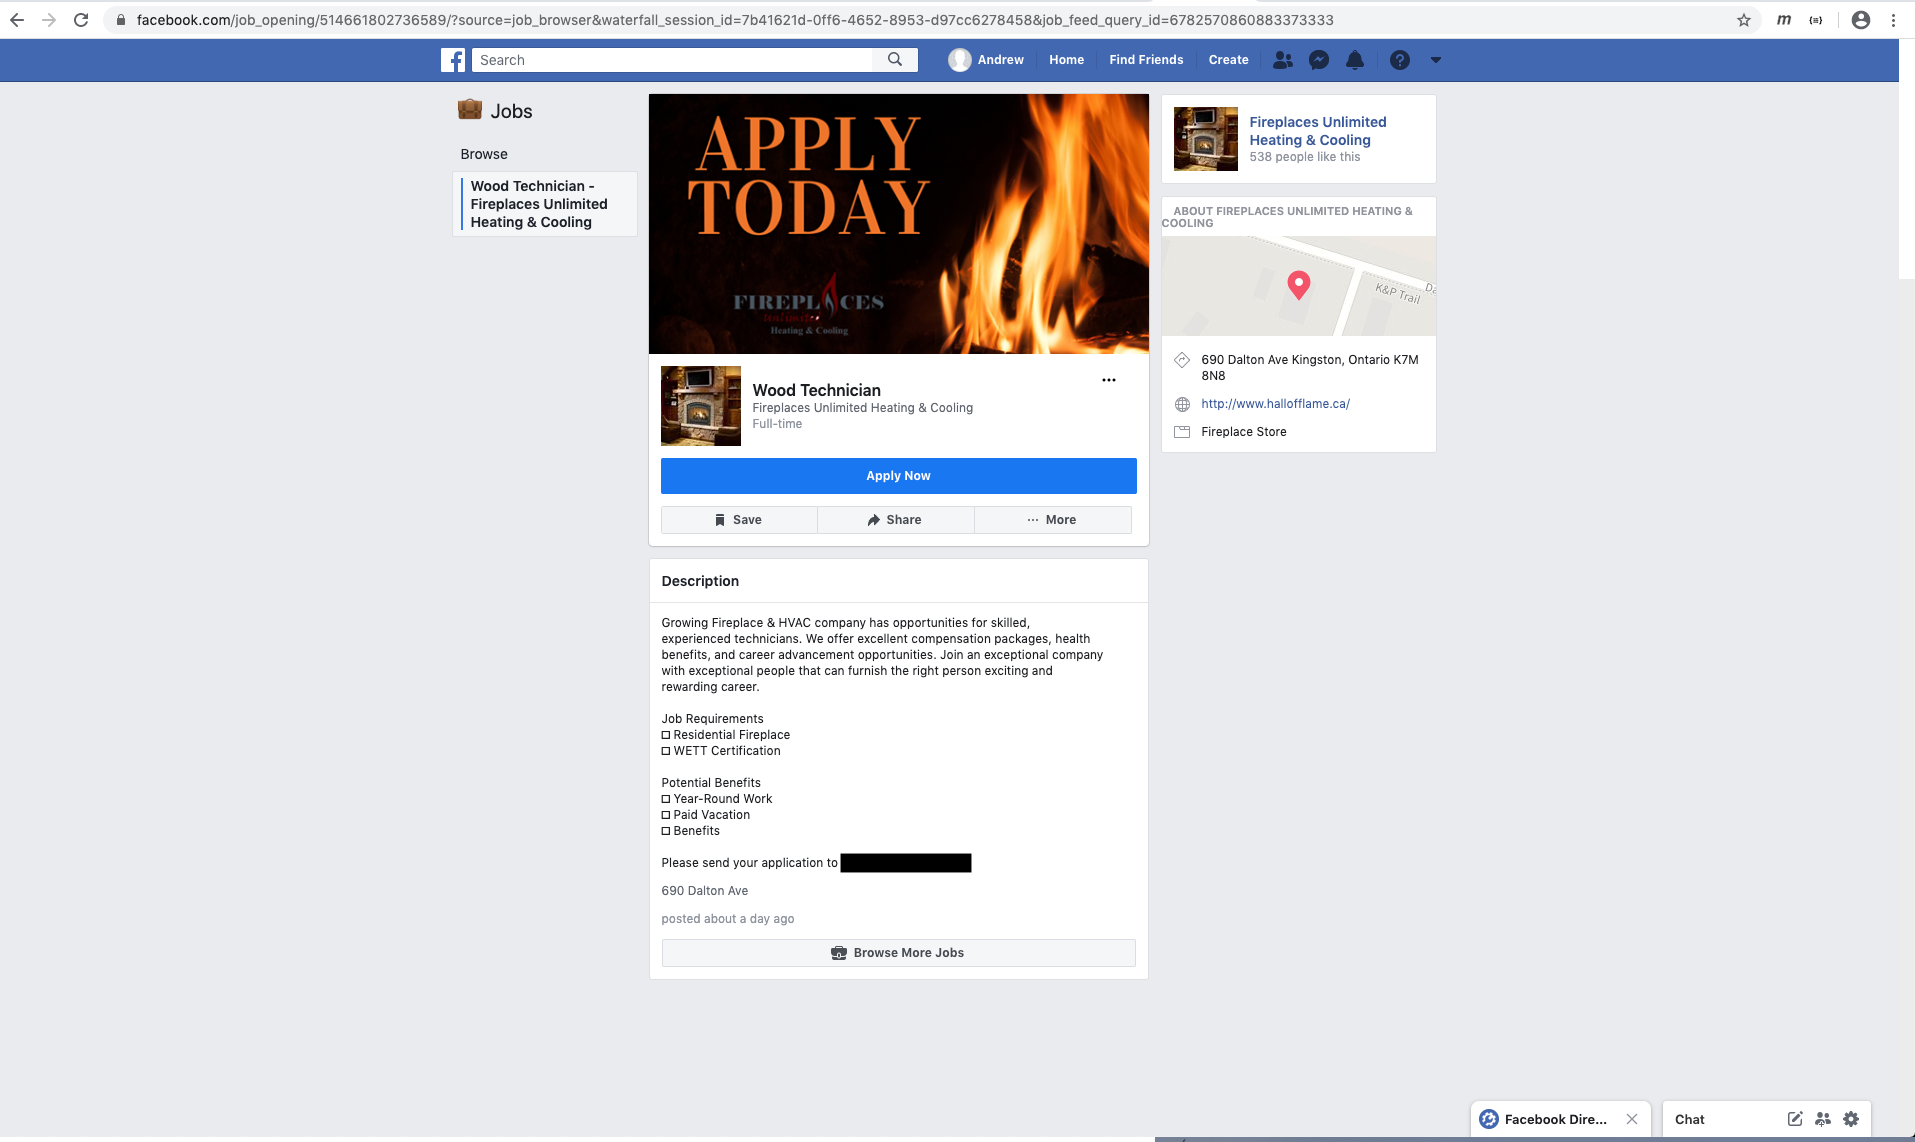 Facebook Jobs API Image Carousel